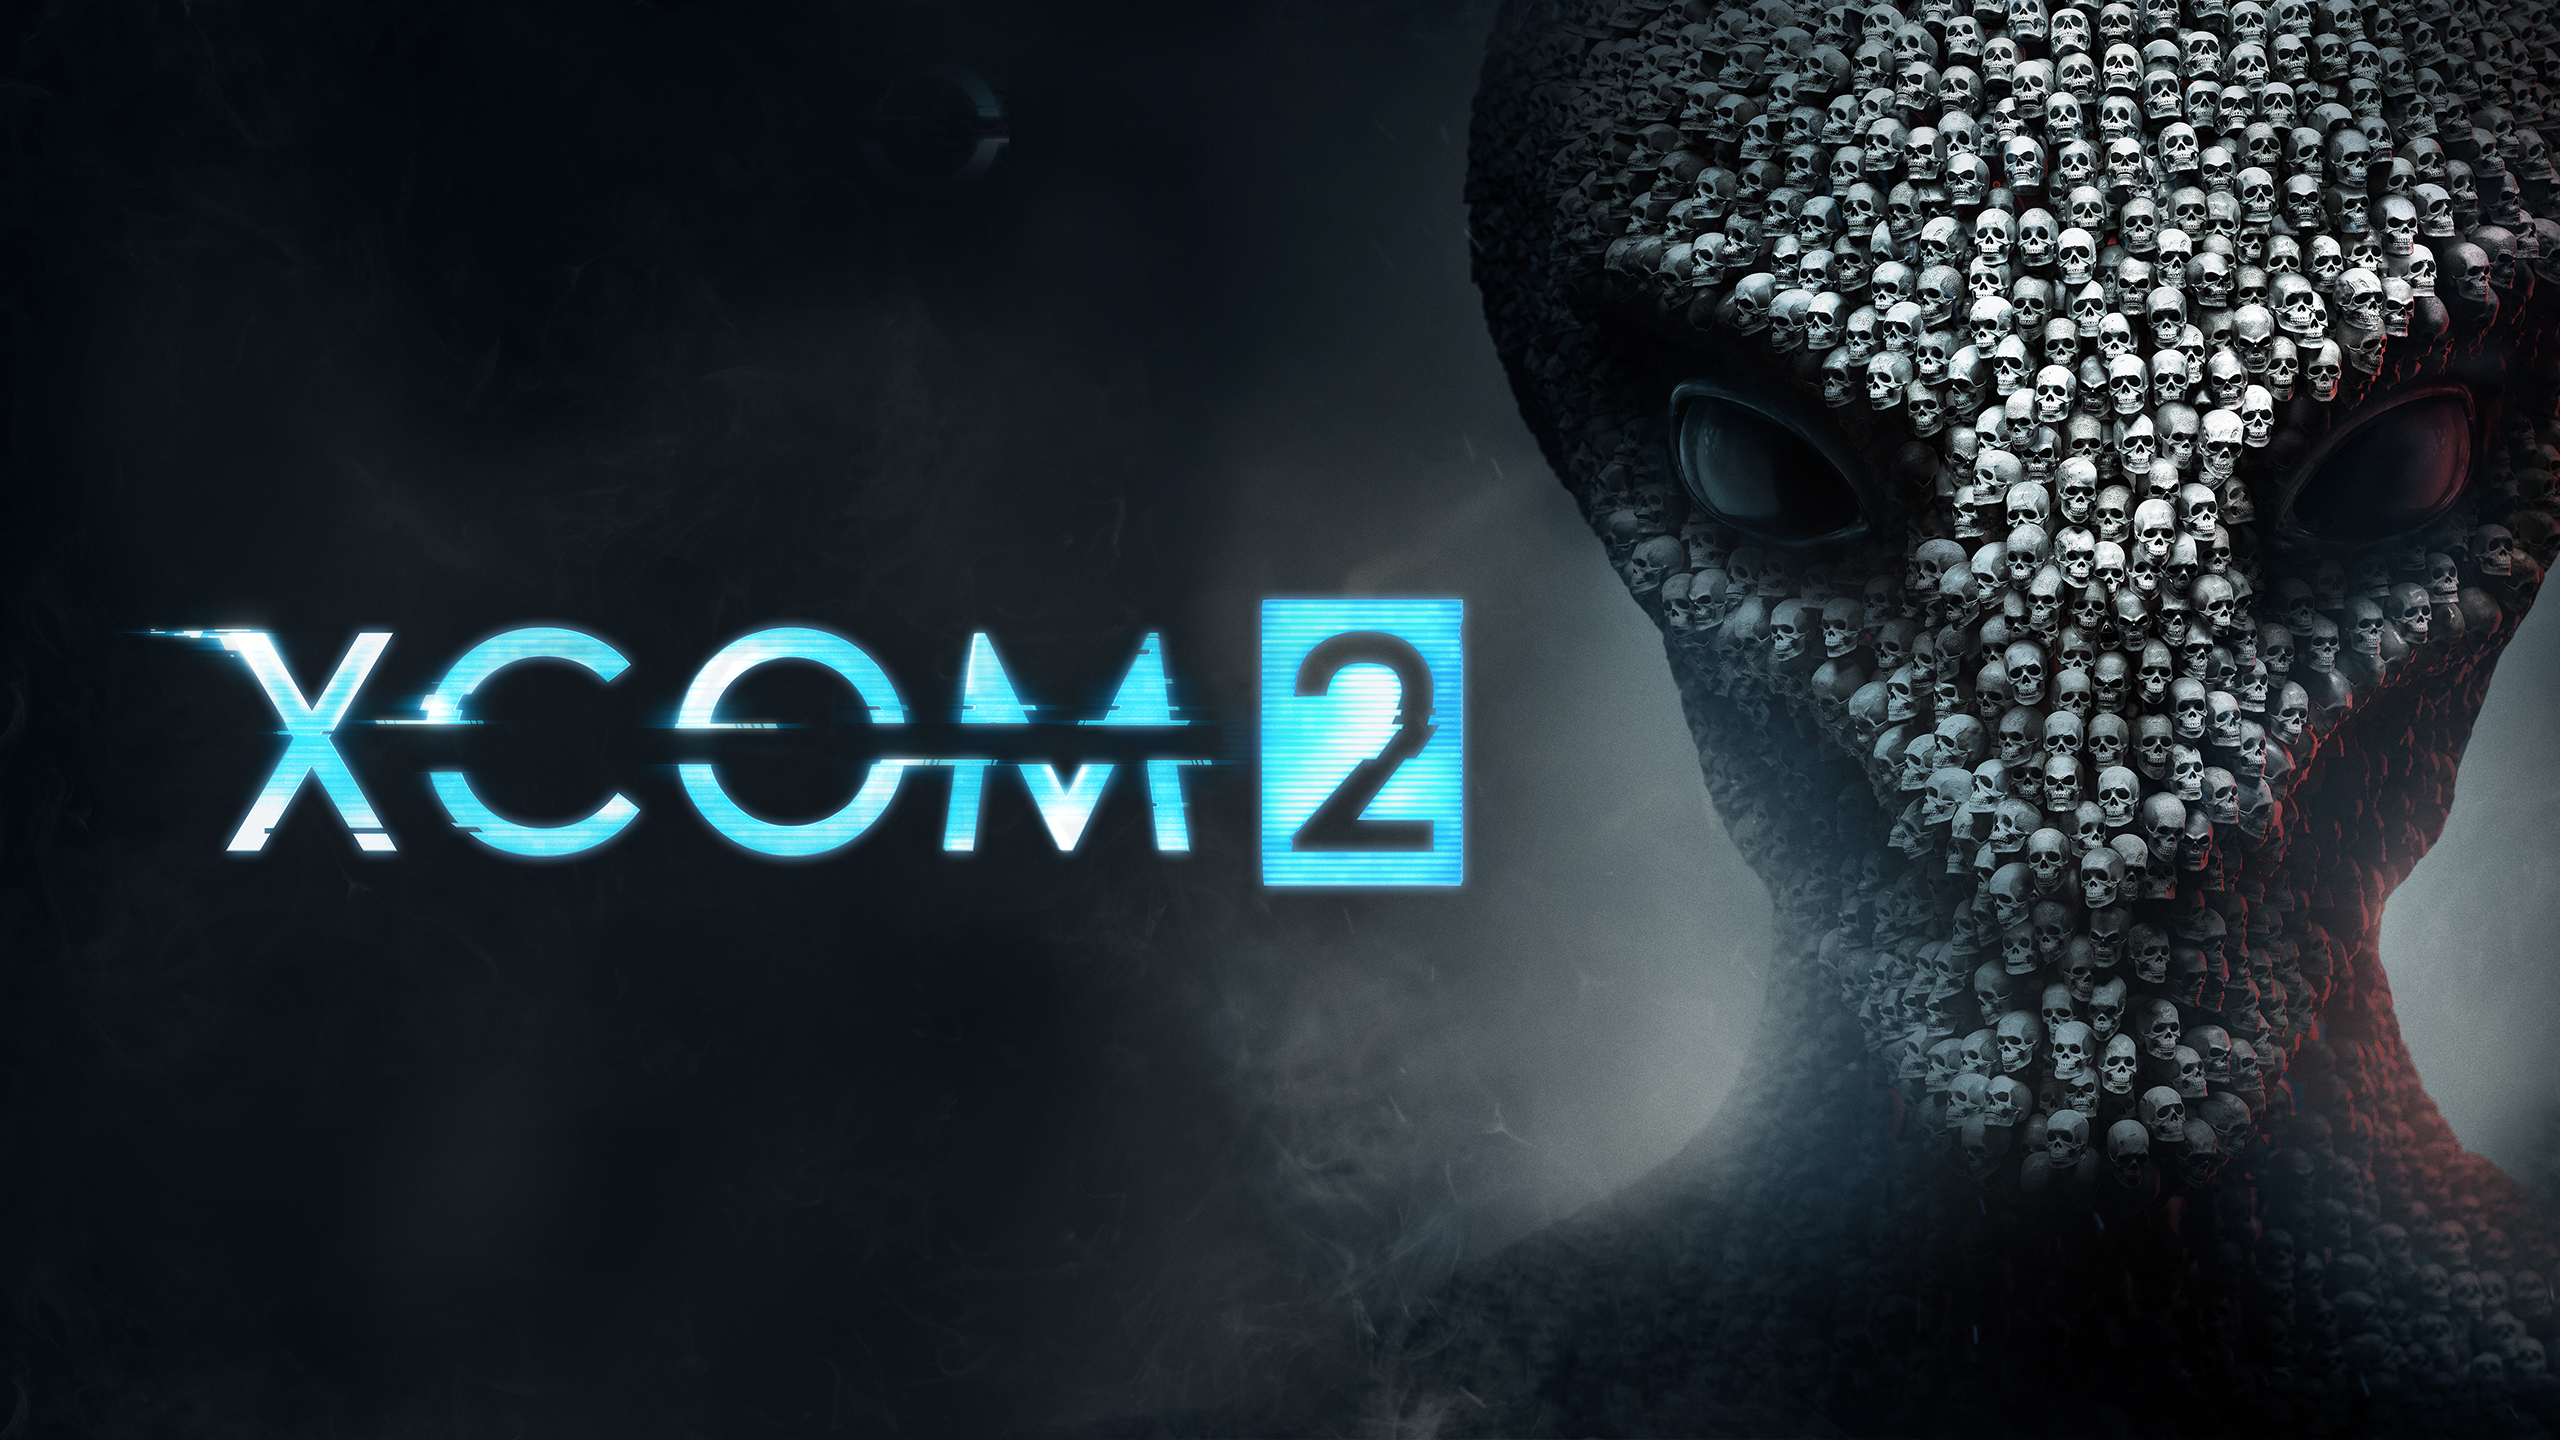 XCOM 2 PC Game Latest Version Free Download